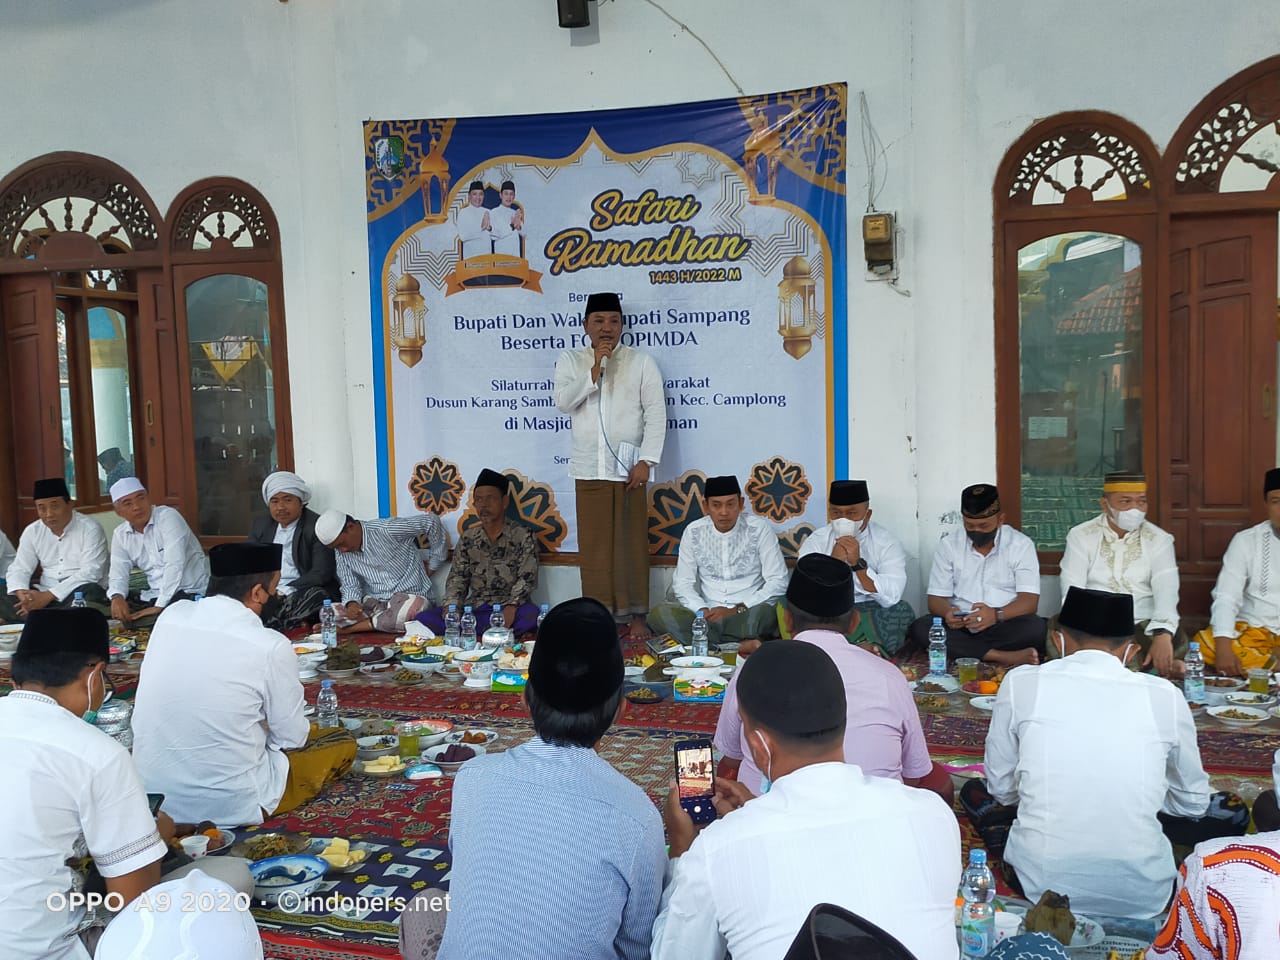 Saat Hadiri Safari Ramadhan di Kecamatan Camplong, Bupati Dan Wakil Bupati Sampang Mendapatkan Keluhan Infrastruktur Dan Tenaga Pengajar.